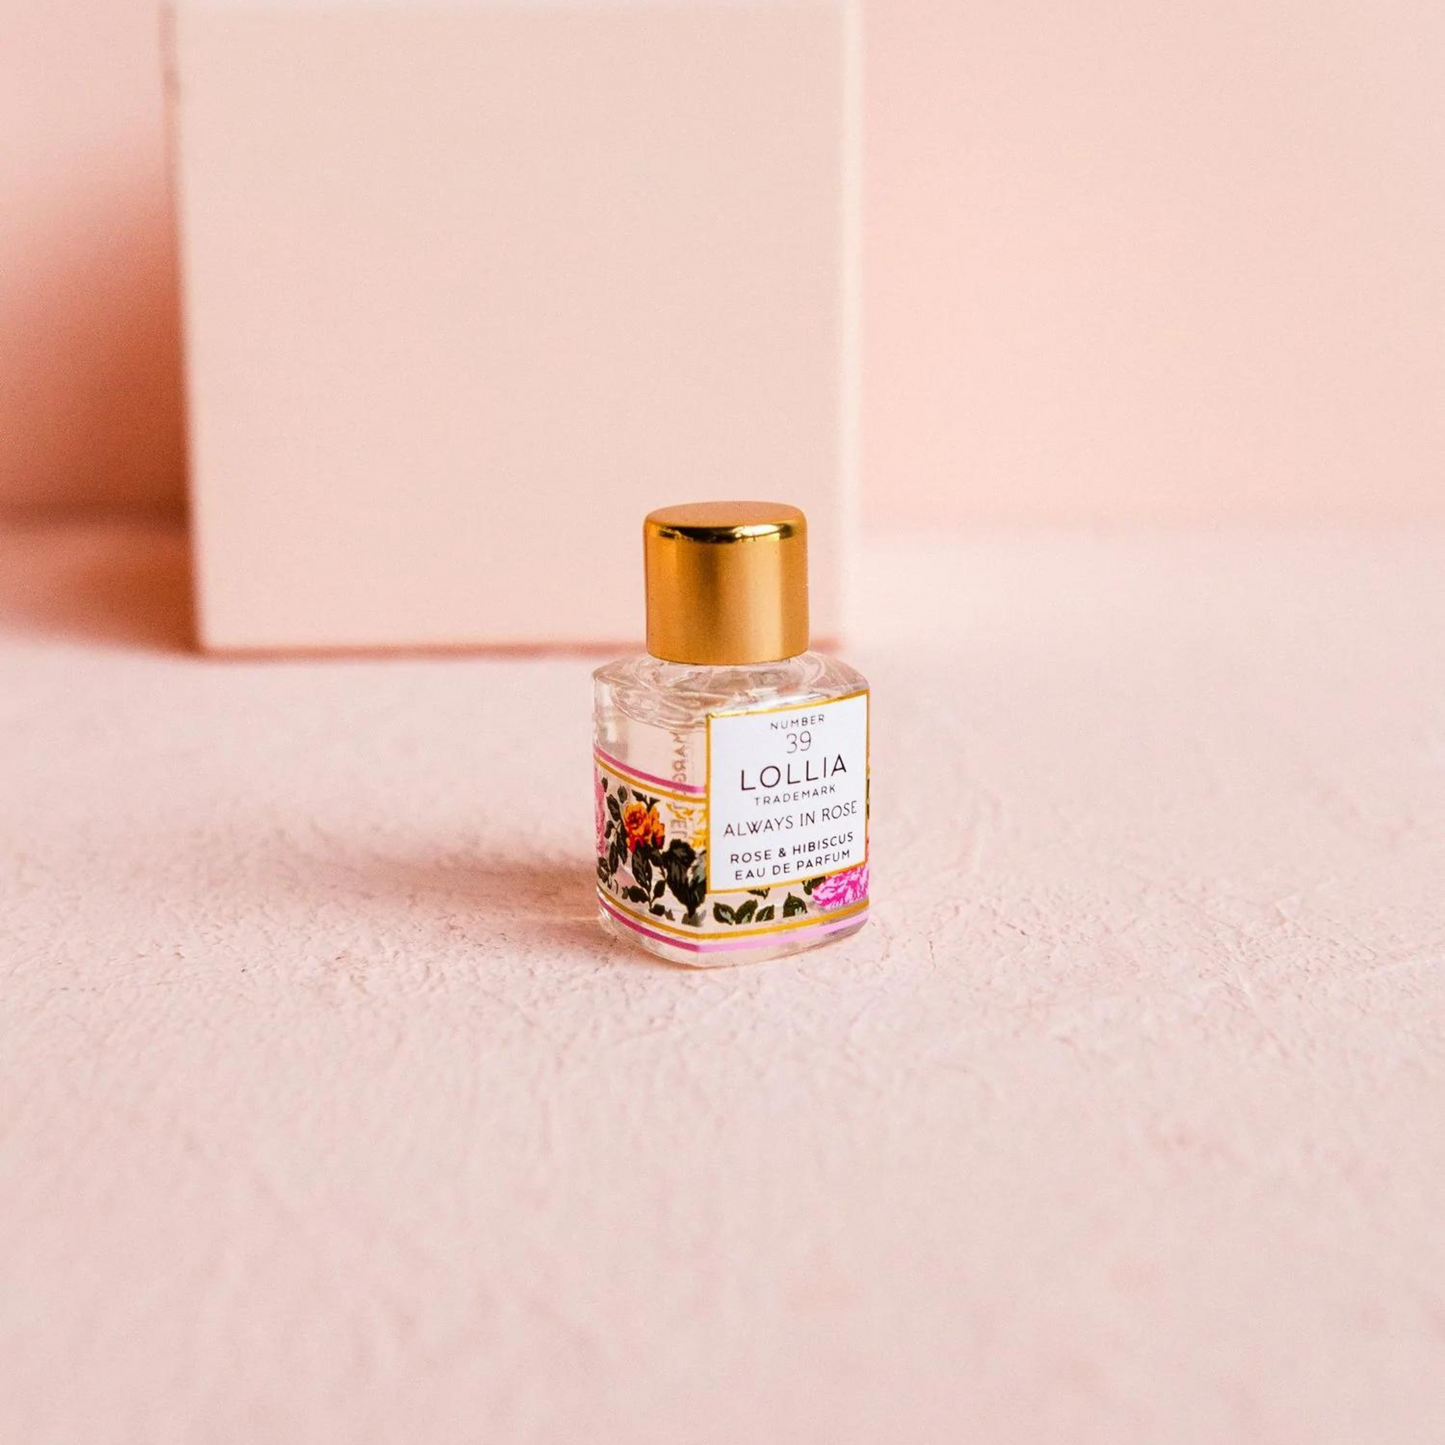 Lollia - Little Luxe Eau de Parfum - Always in Rose